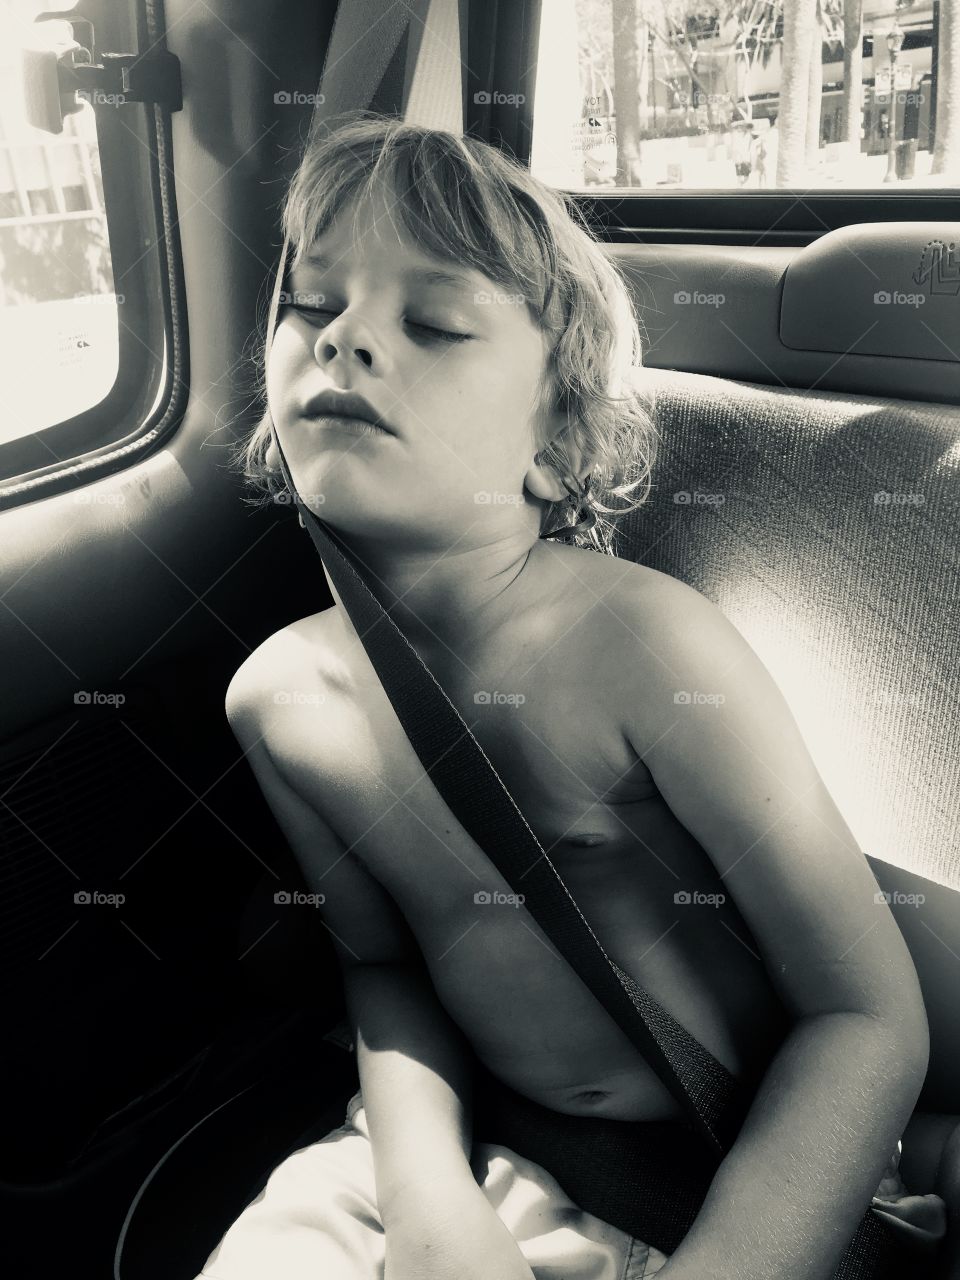 Child sleeps in backseat of truck